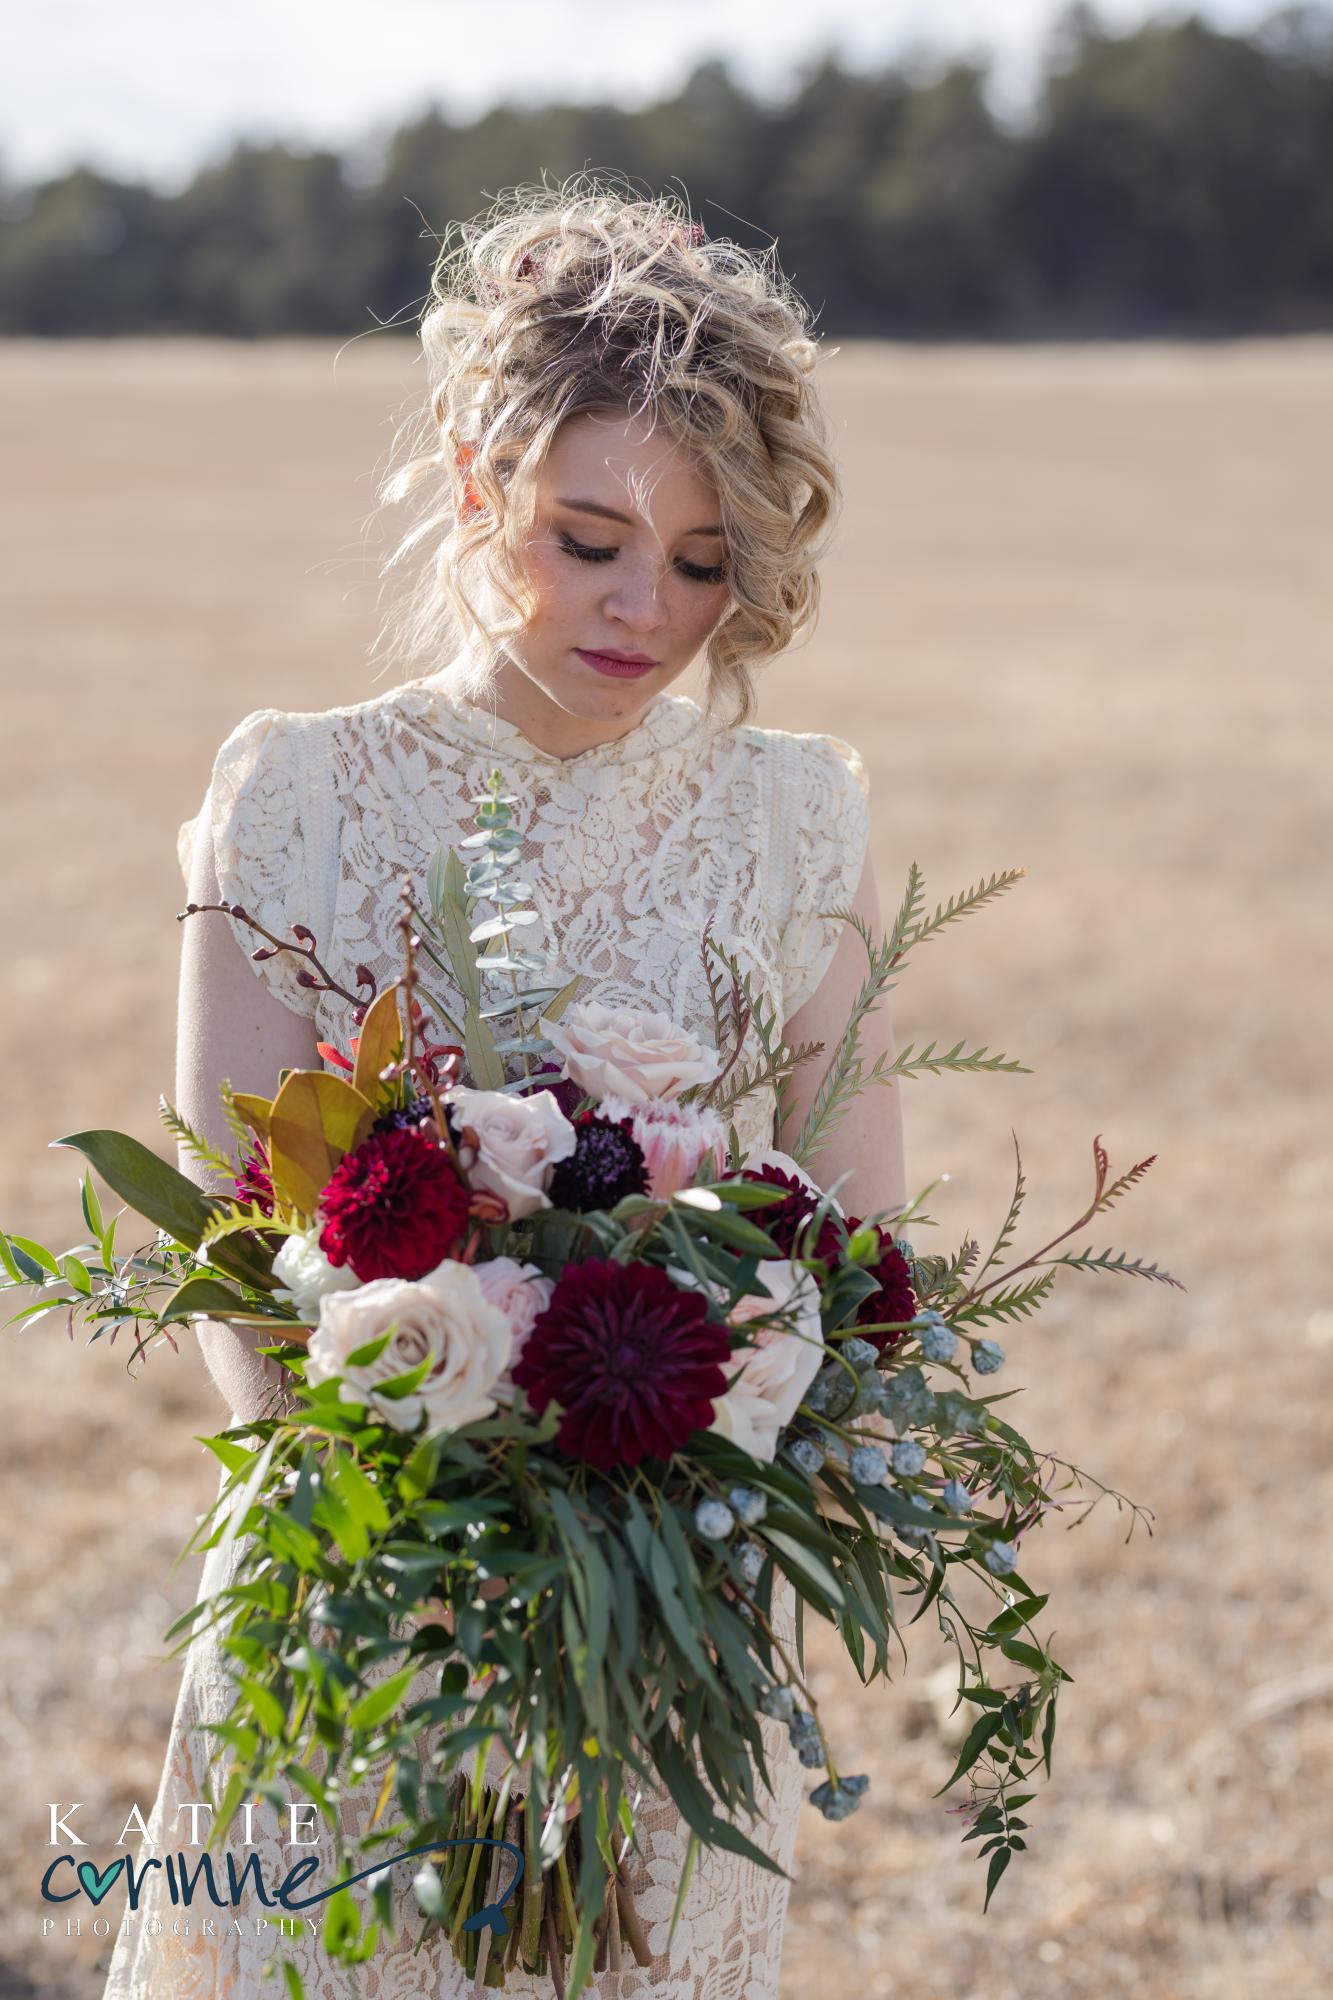 Colorado Springs bride holds wedding bouquet